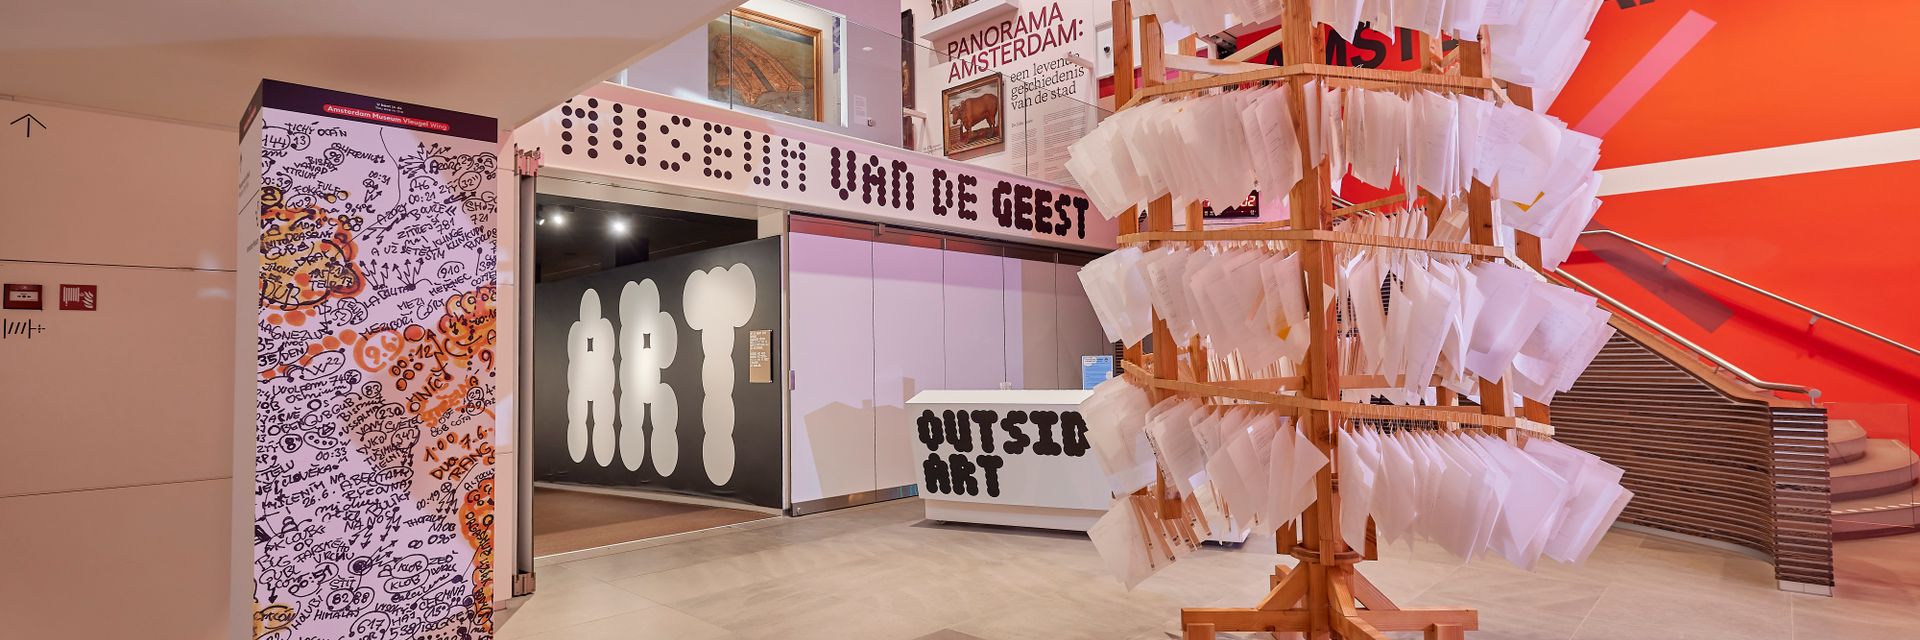 Museo del Espíritu - Ámsterdam